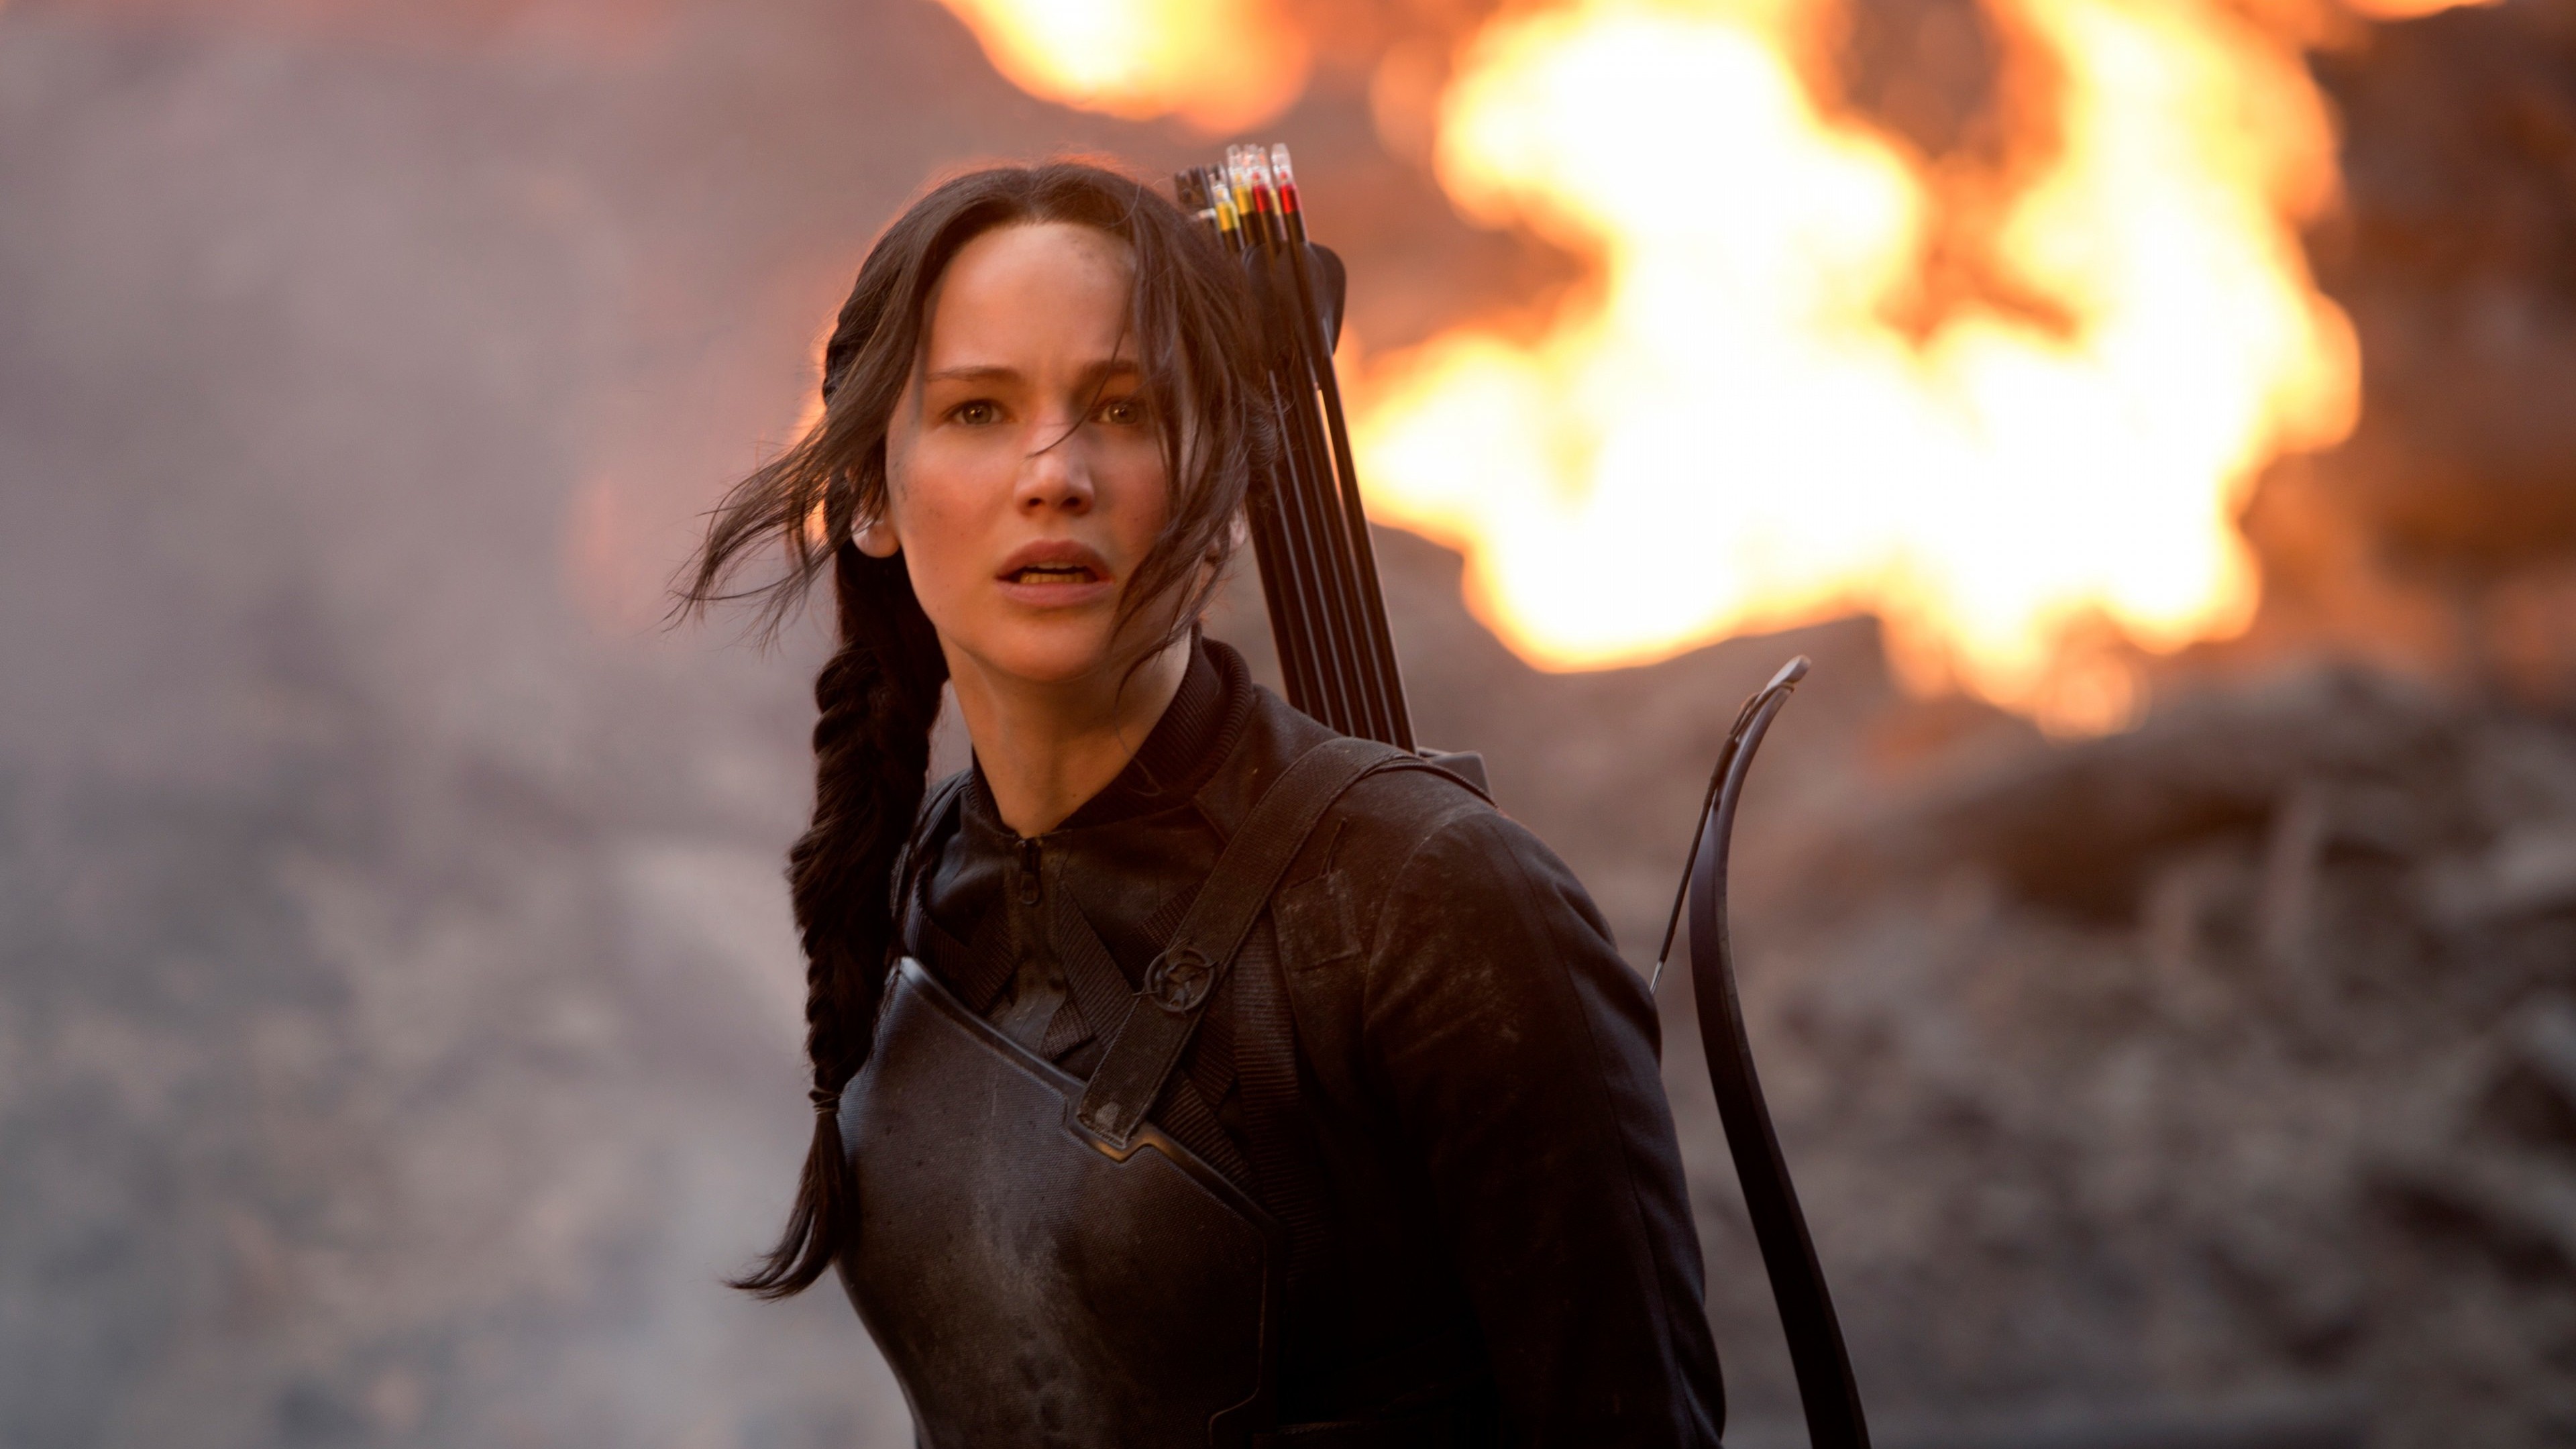 Jennifer Lawrence in The Hunger Games Wallpaper for Desktop 4K 3840x2160